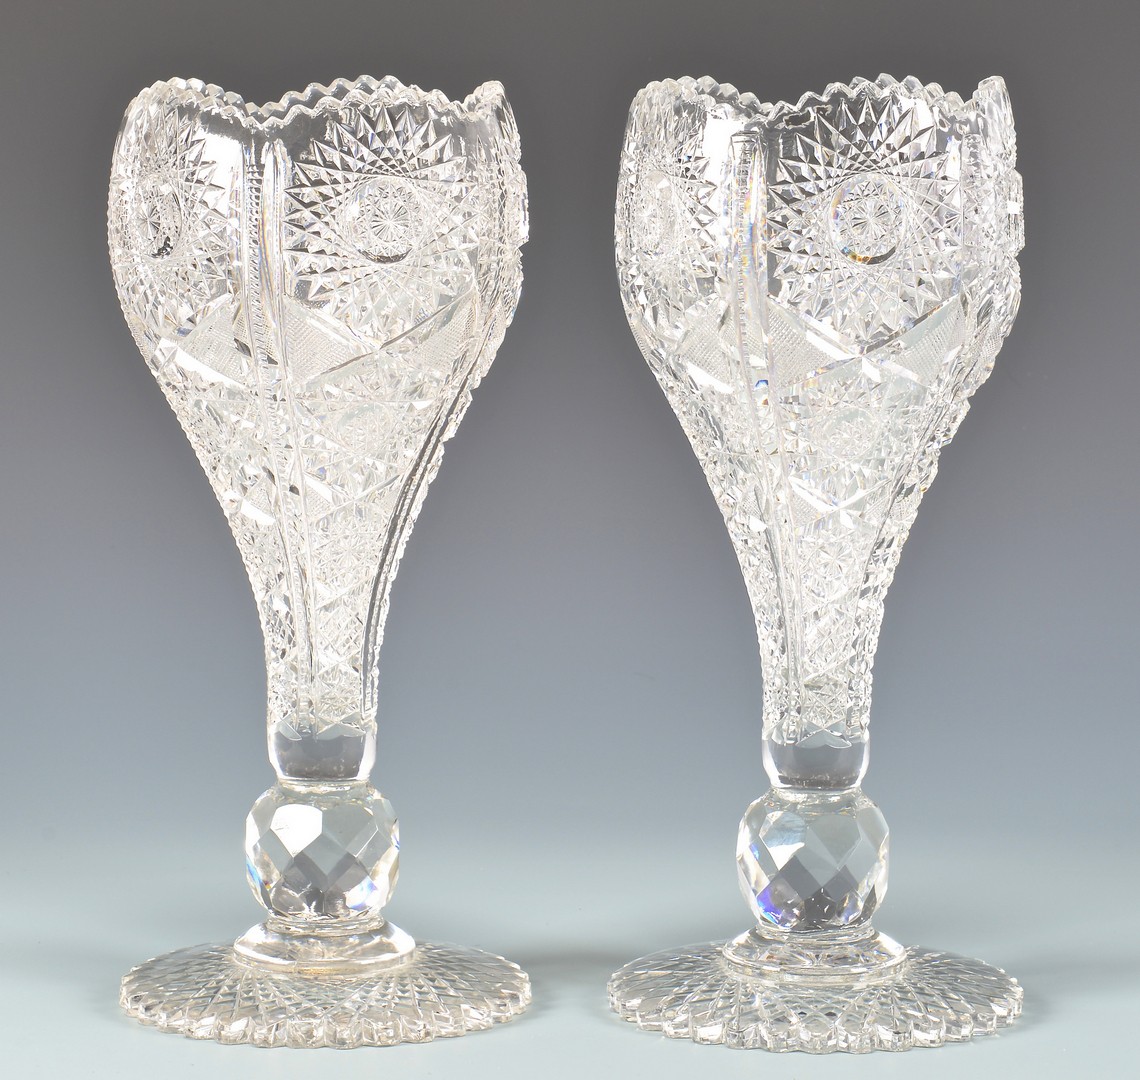 Lot 724: 4 American Brilliant Cut Glass Vases